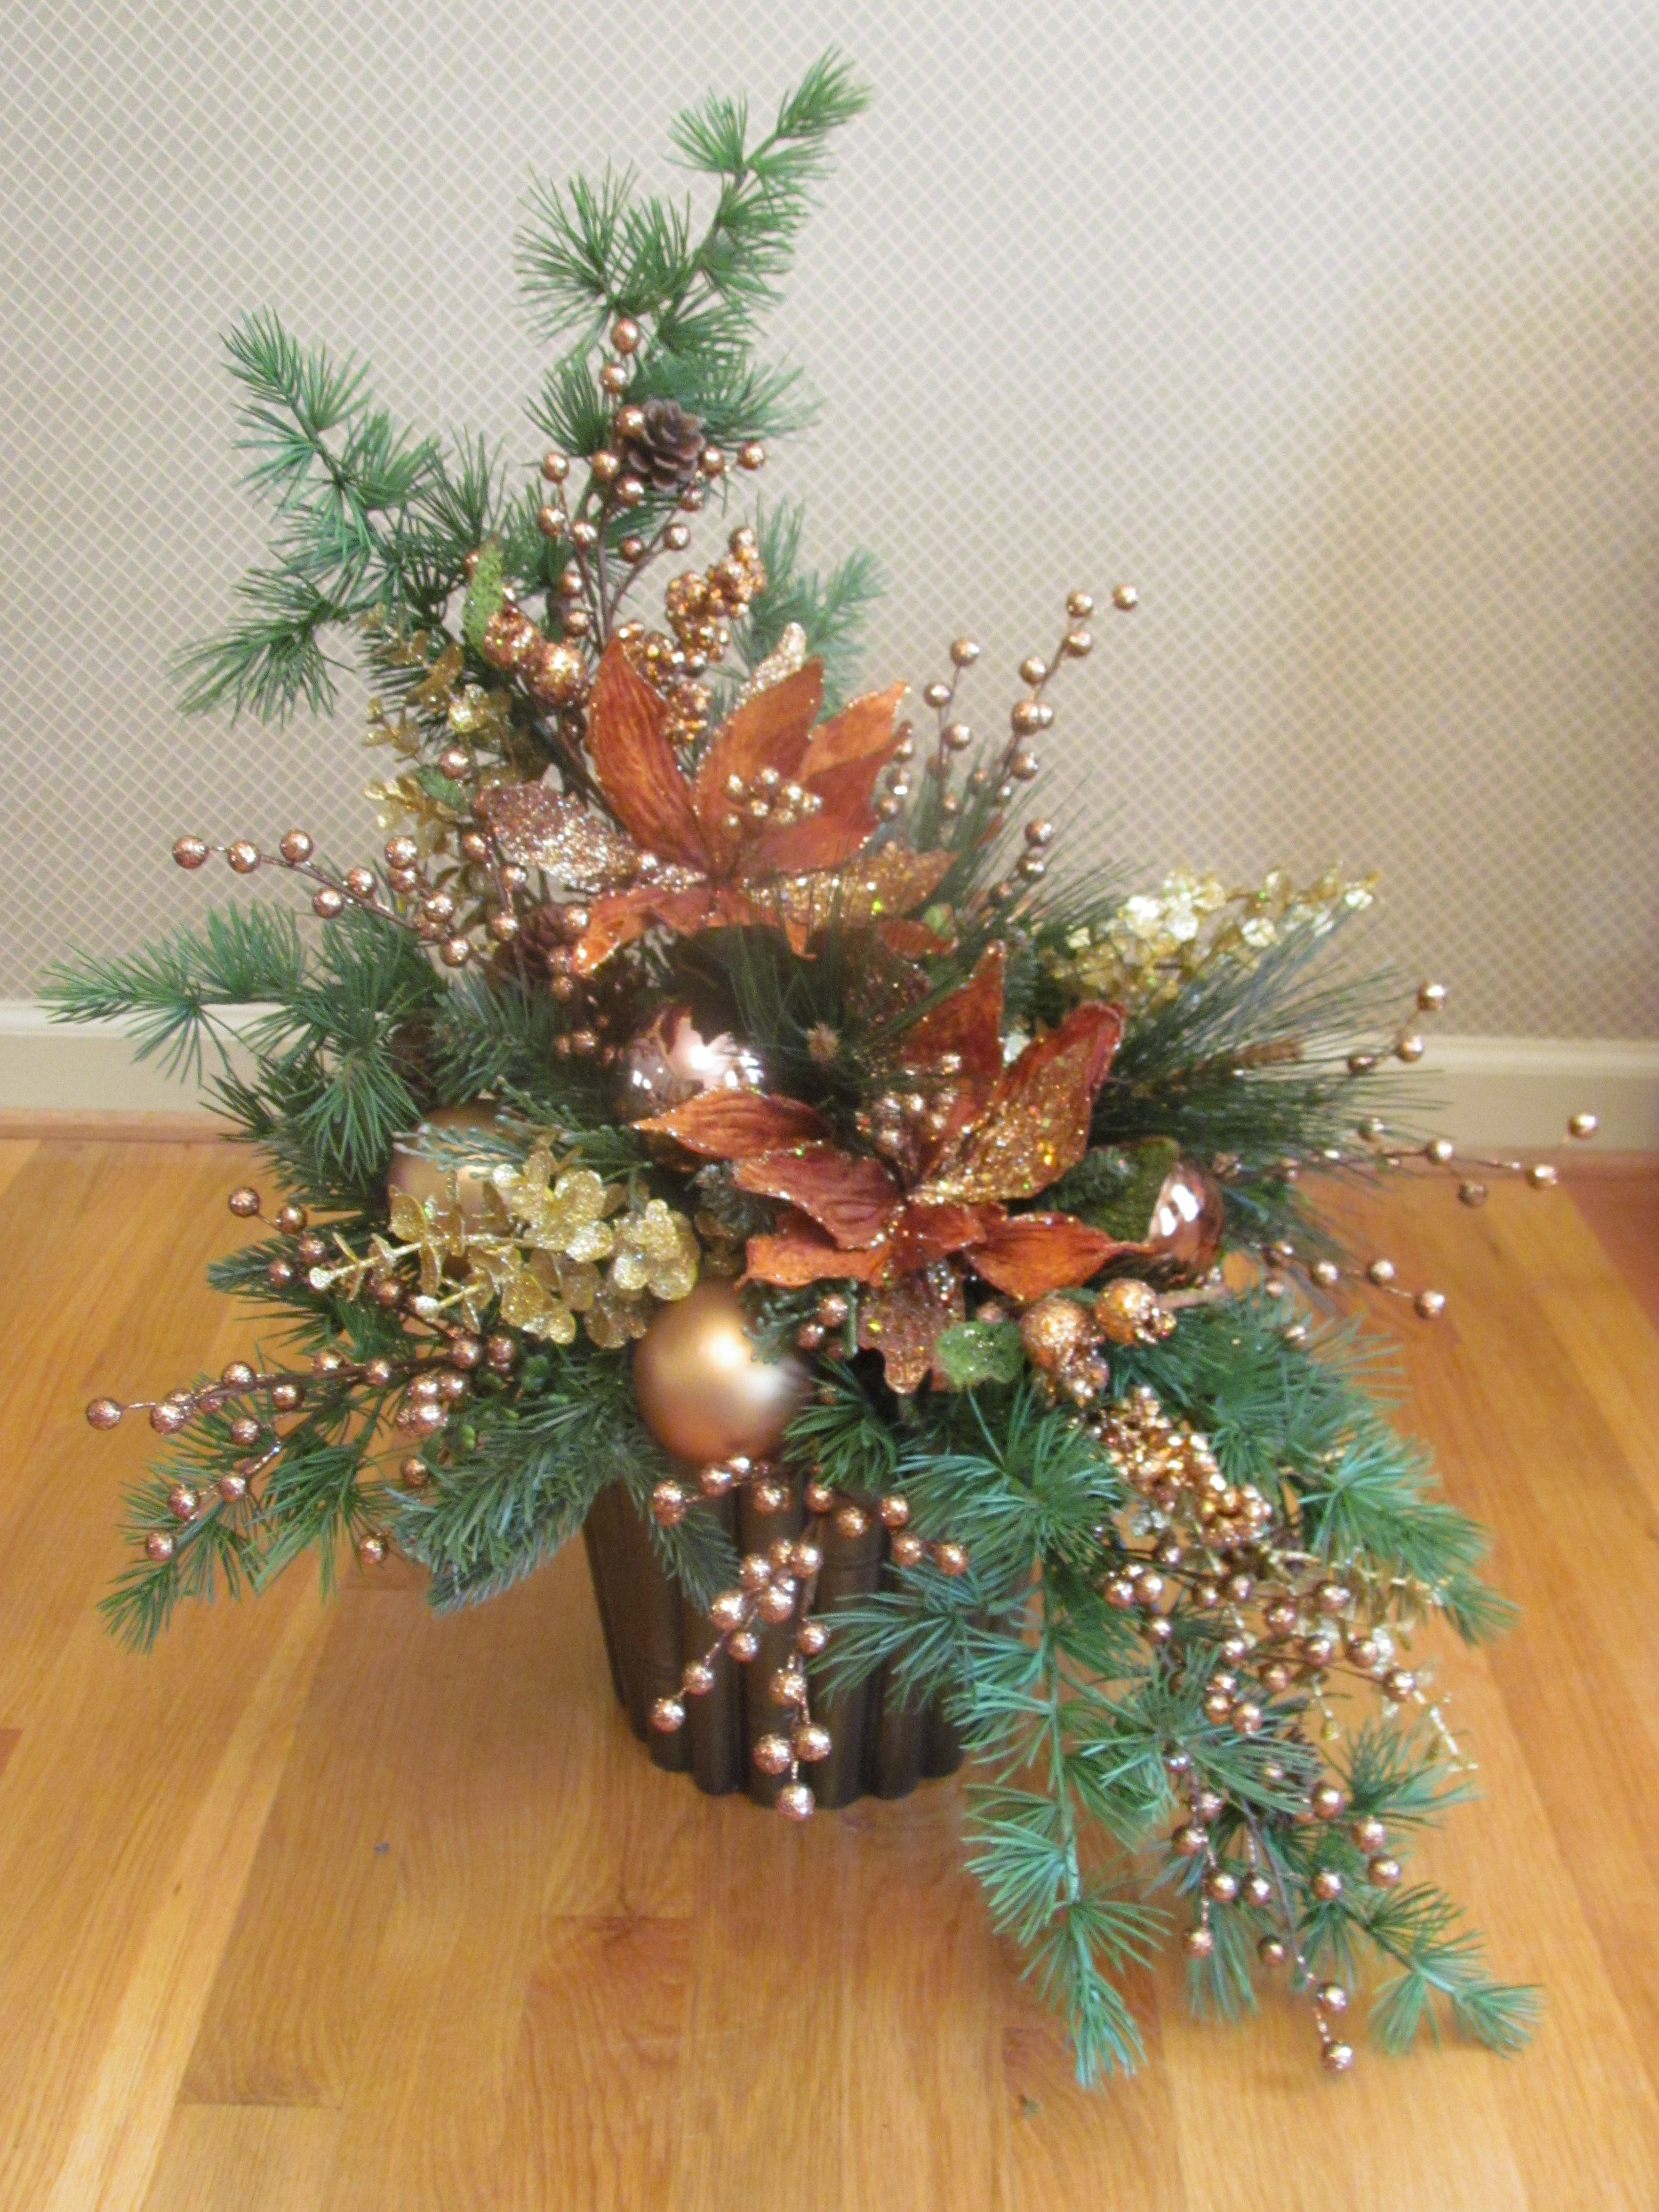 Christmas Artificial Flower Arrangements
 e of a reverse matched pair of artificial Christmas